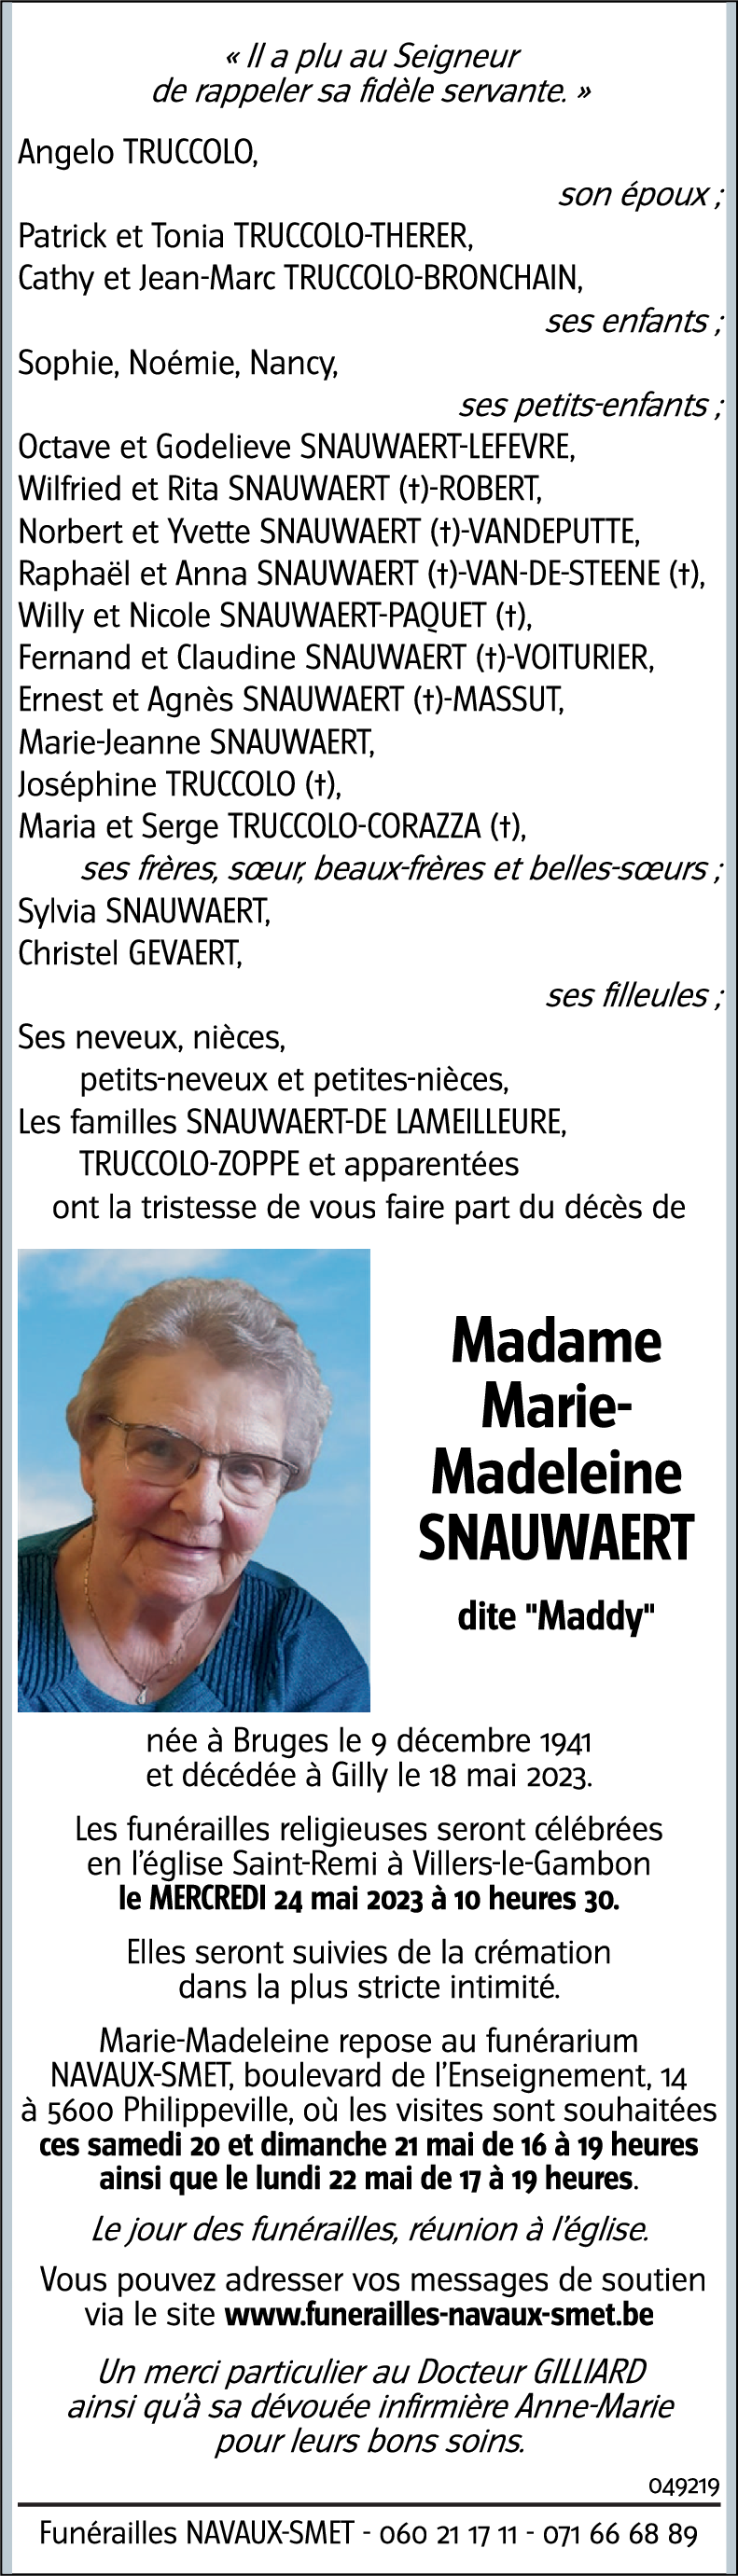 Marie-Madeleine SNAUWAERT